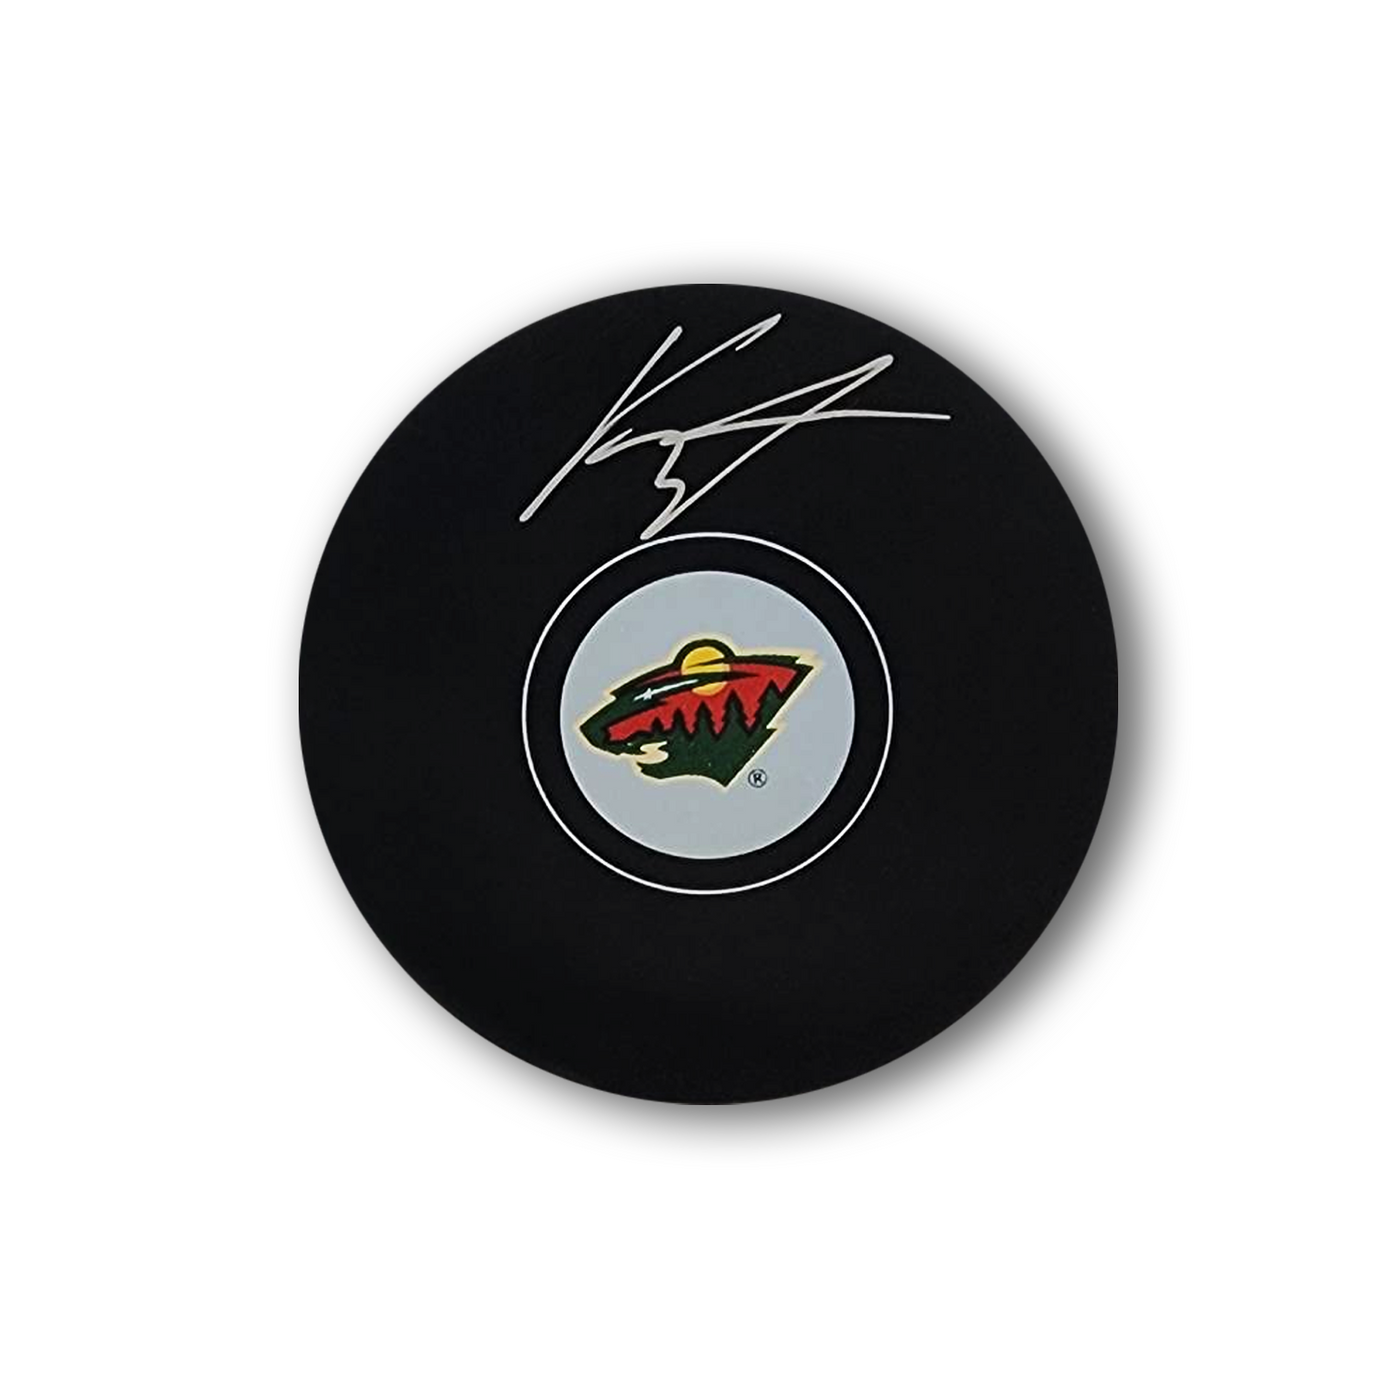 Kirill Kaprizov Minnesota Wild Autographed Hockey Puck